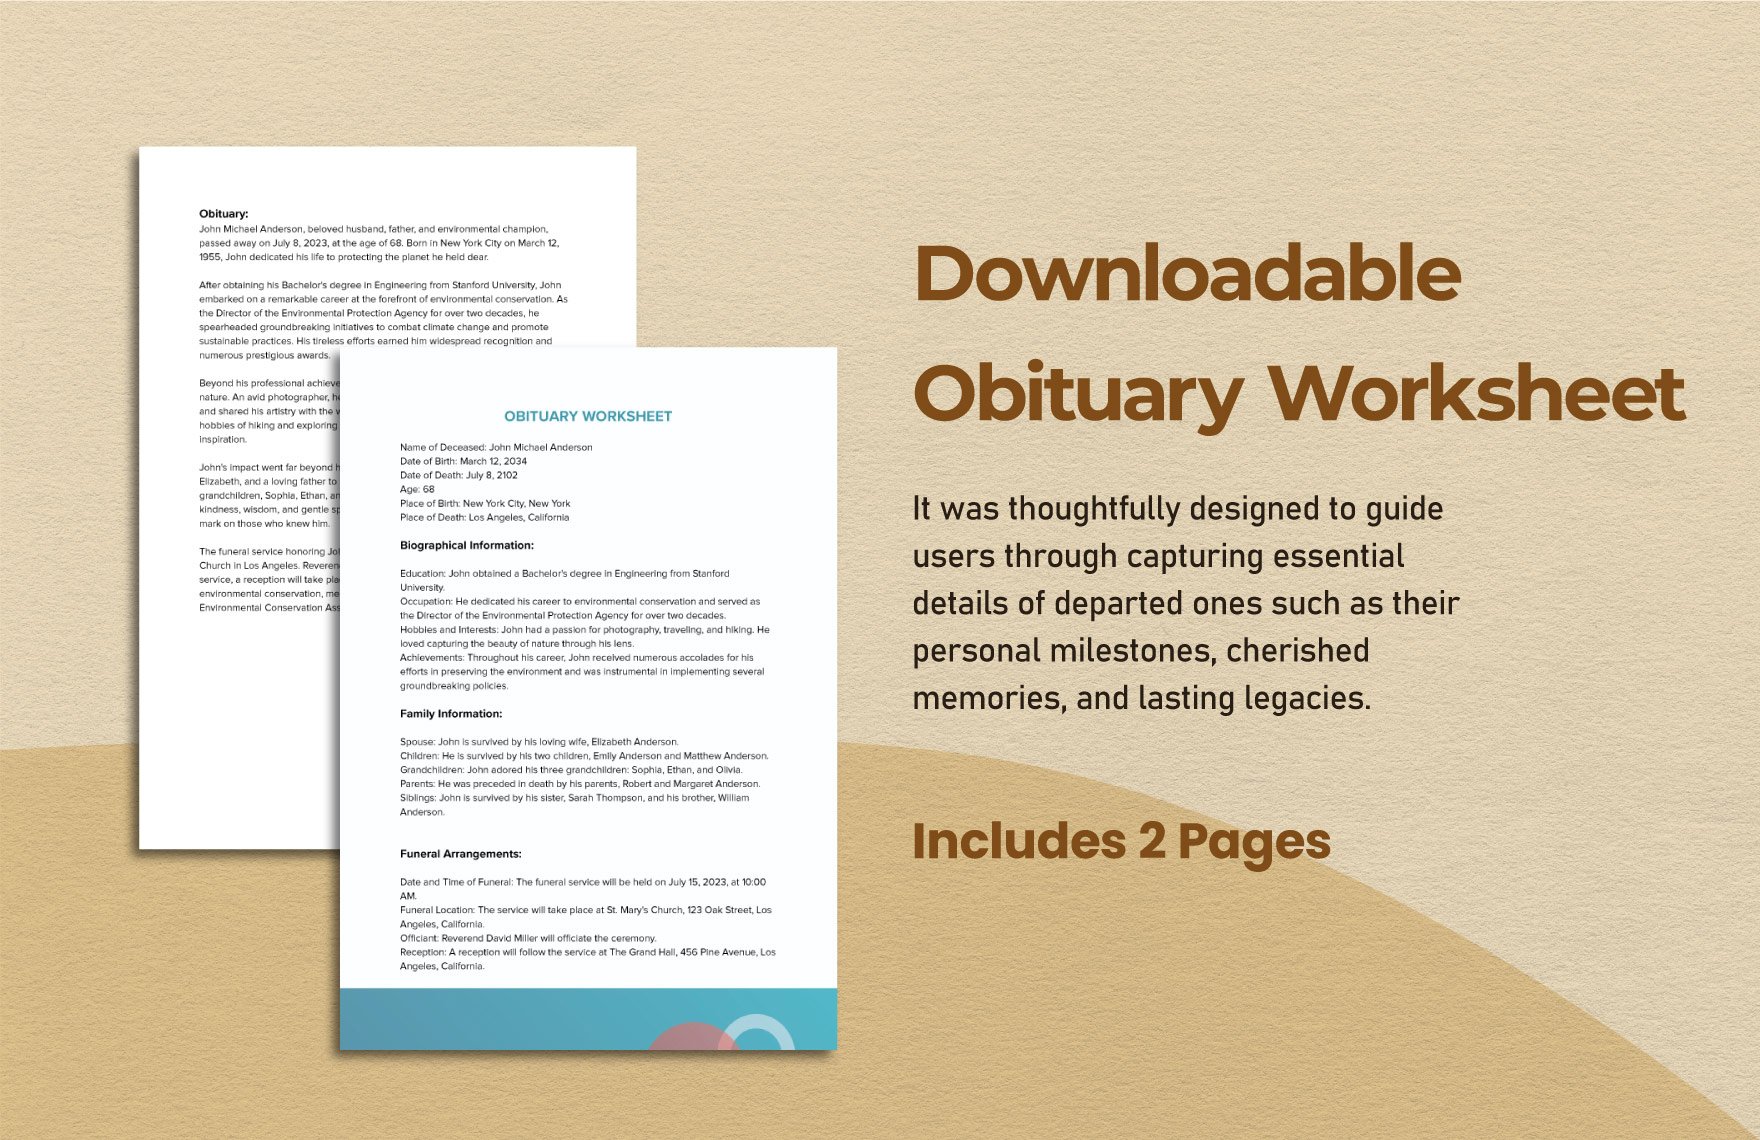 Downloadable Obituary Worksheet